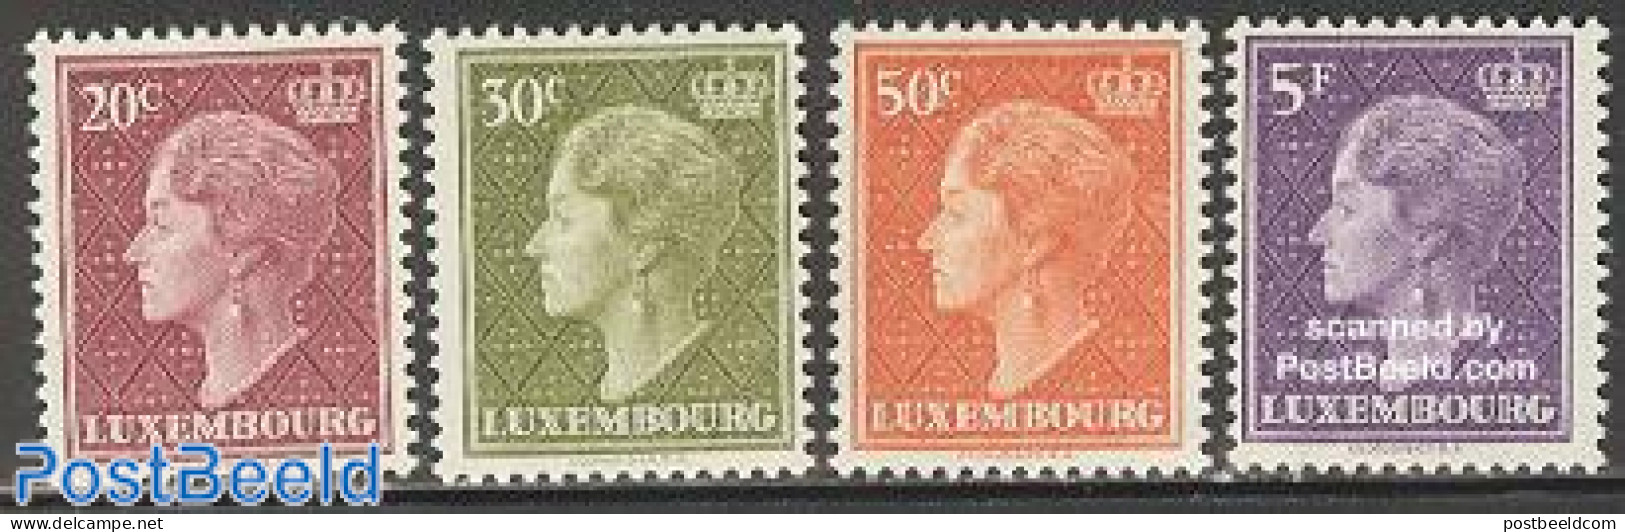 Luxemburg 1958 Definitives 4v, Mint NH - Unused Stamps